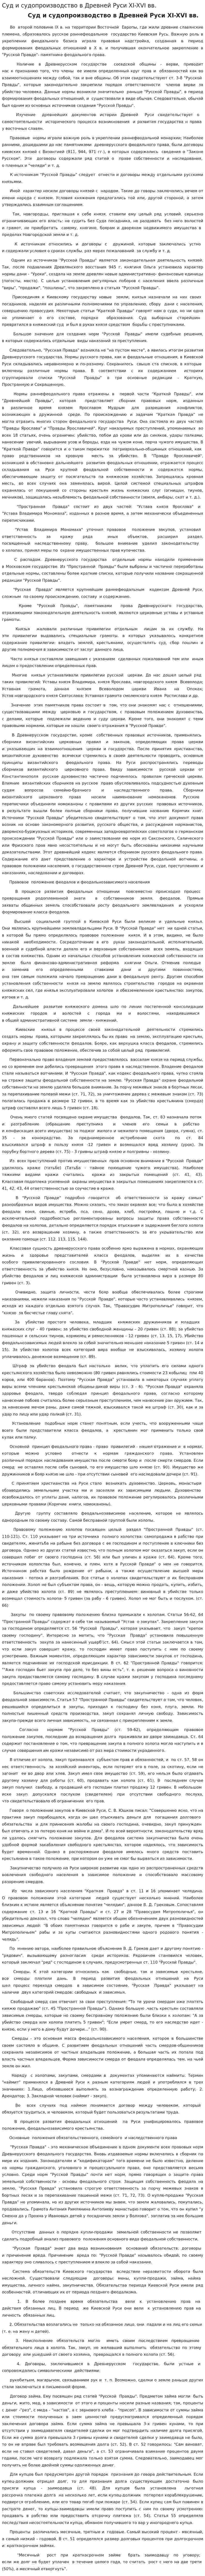 Суд и судопроизводство в Древней Руси XI-XVI вв.